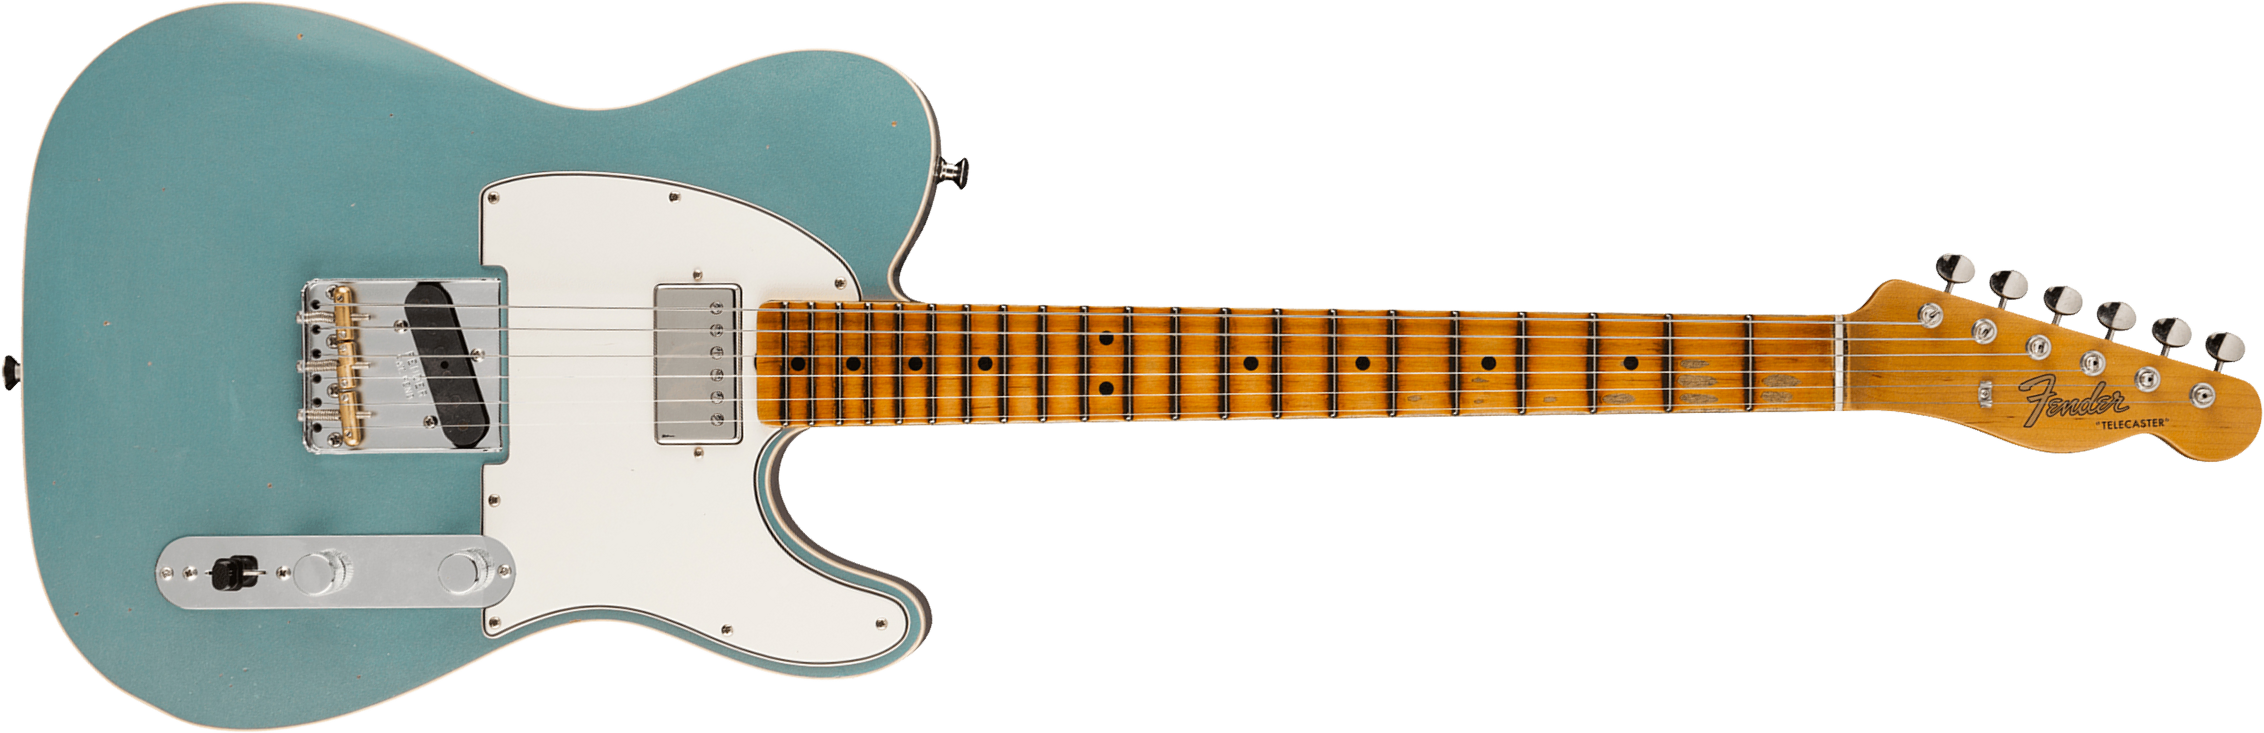 Fender Custom Shop Tele Postmodern Usa Sh Ht Mn - Journeyman Relic Firemist Silver - Guitarra eléctrica con forma de tel - Main picture